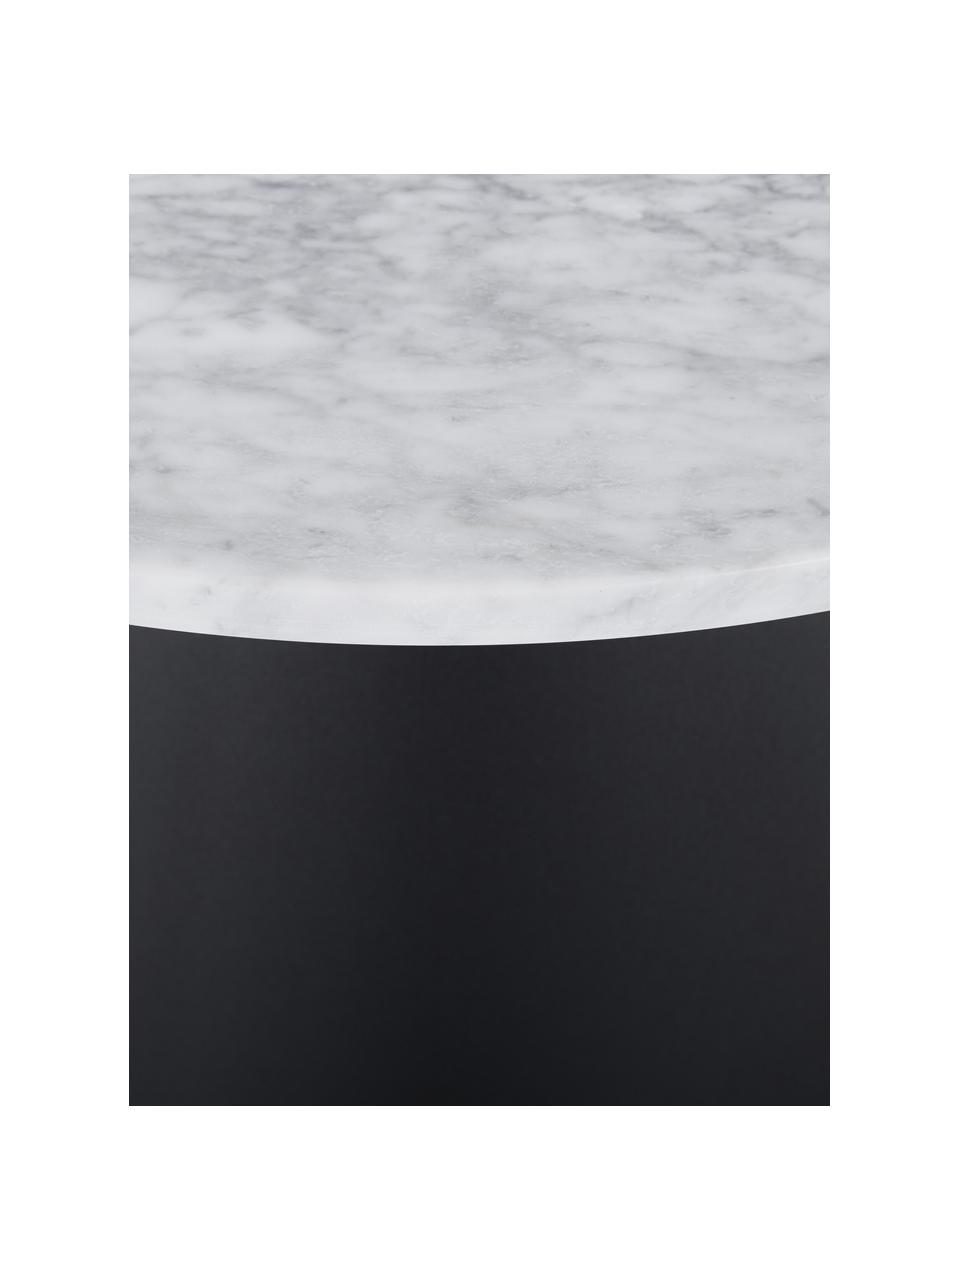 Runder Marmor-Couchtisch Mary, Tischplatte: Carrara-Marmor, Gestell: Metall, beschichtet, Weiss-grauer Marmor, Schwarz, ∅ 70 x H 40 cm